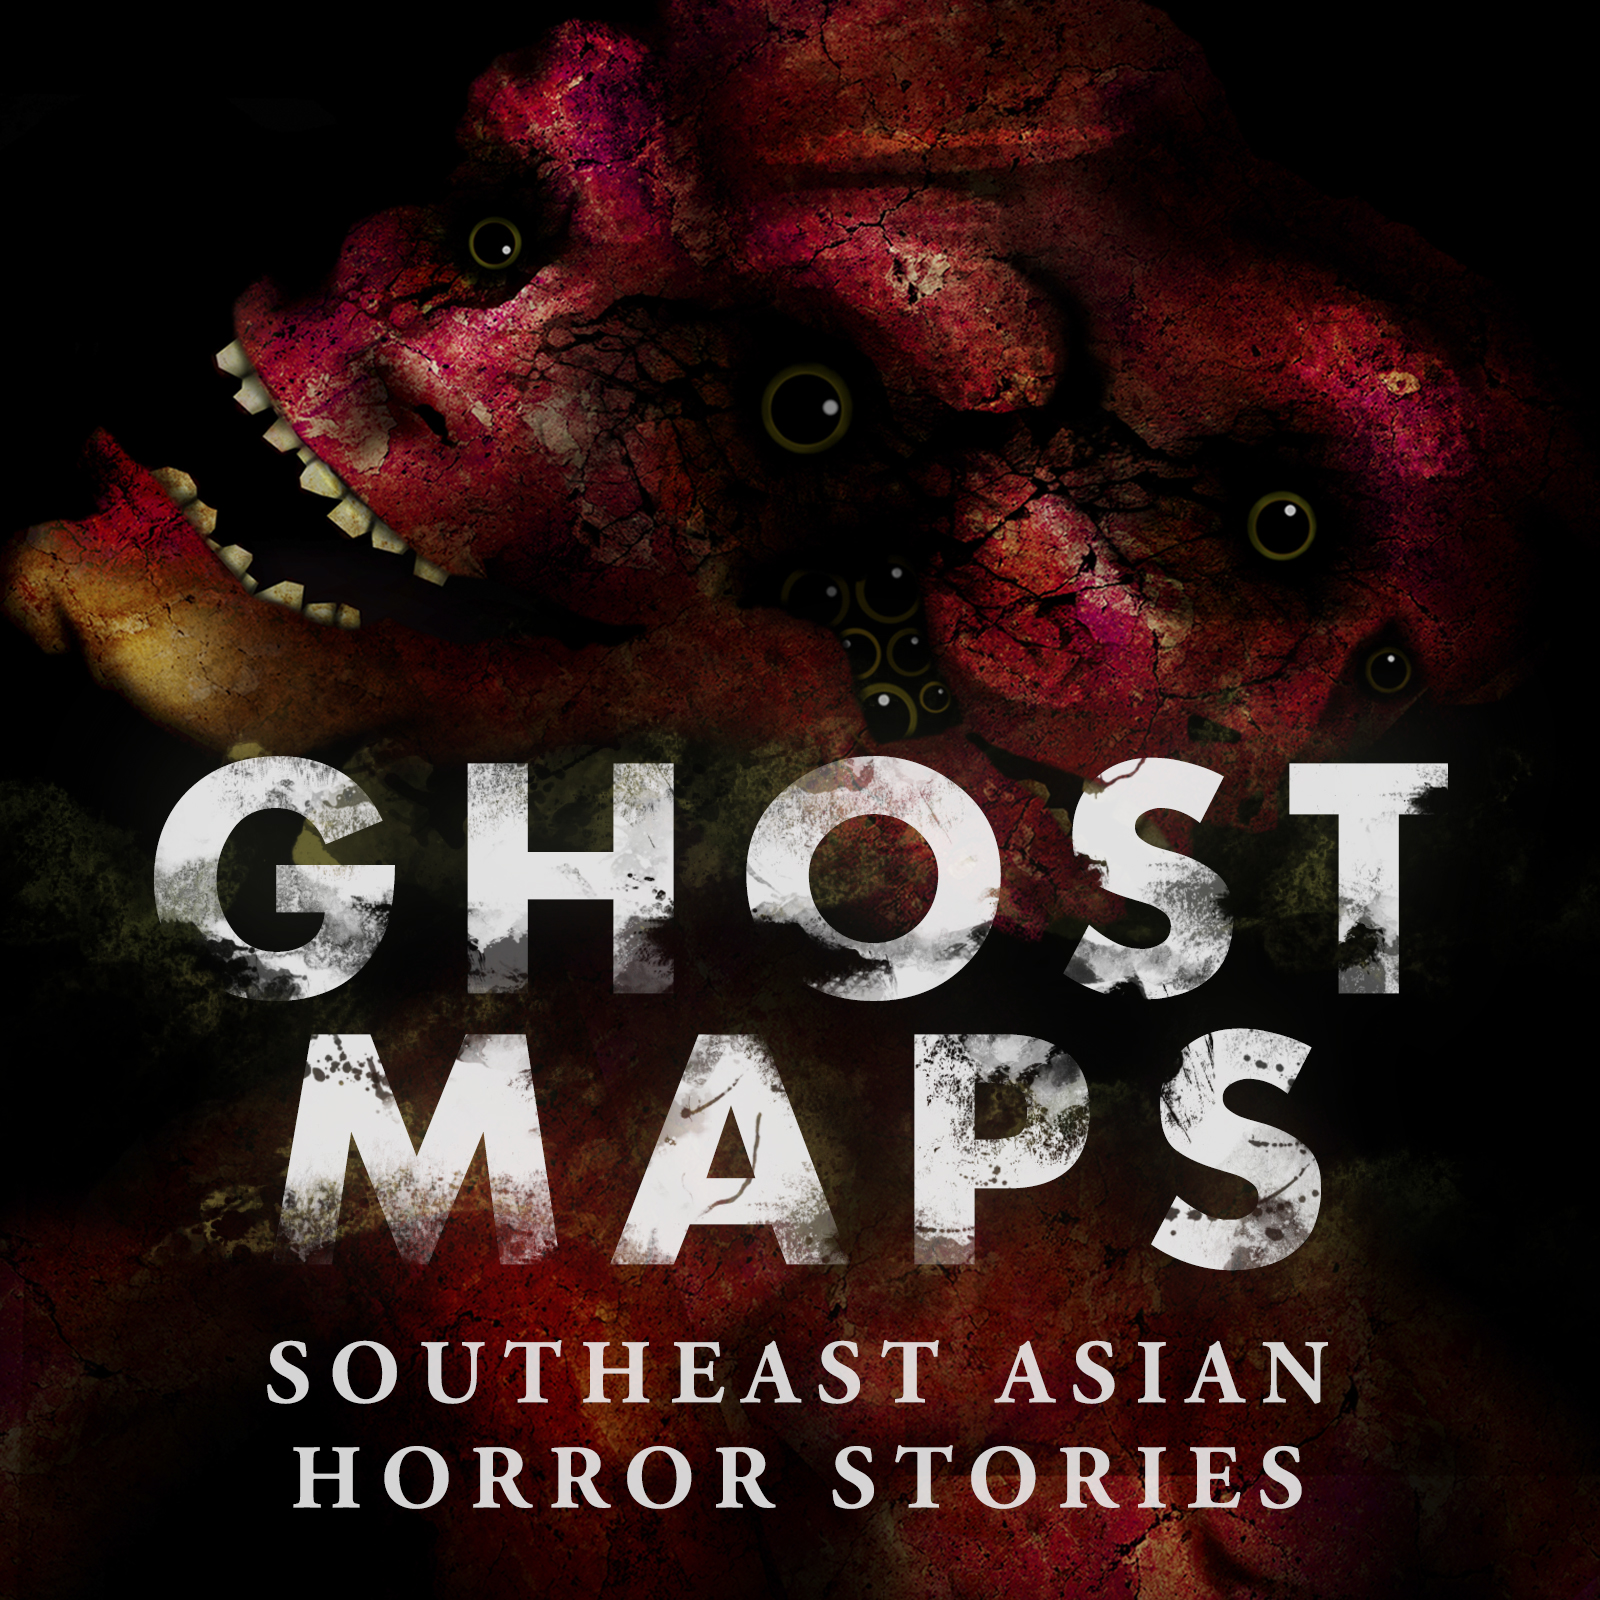 cover art for TRAILER: GHOST MAPS: True Southeast Asian Horror Stories